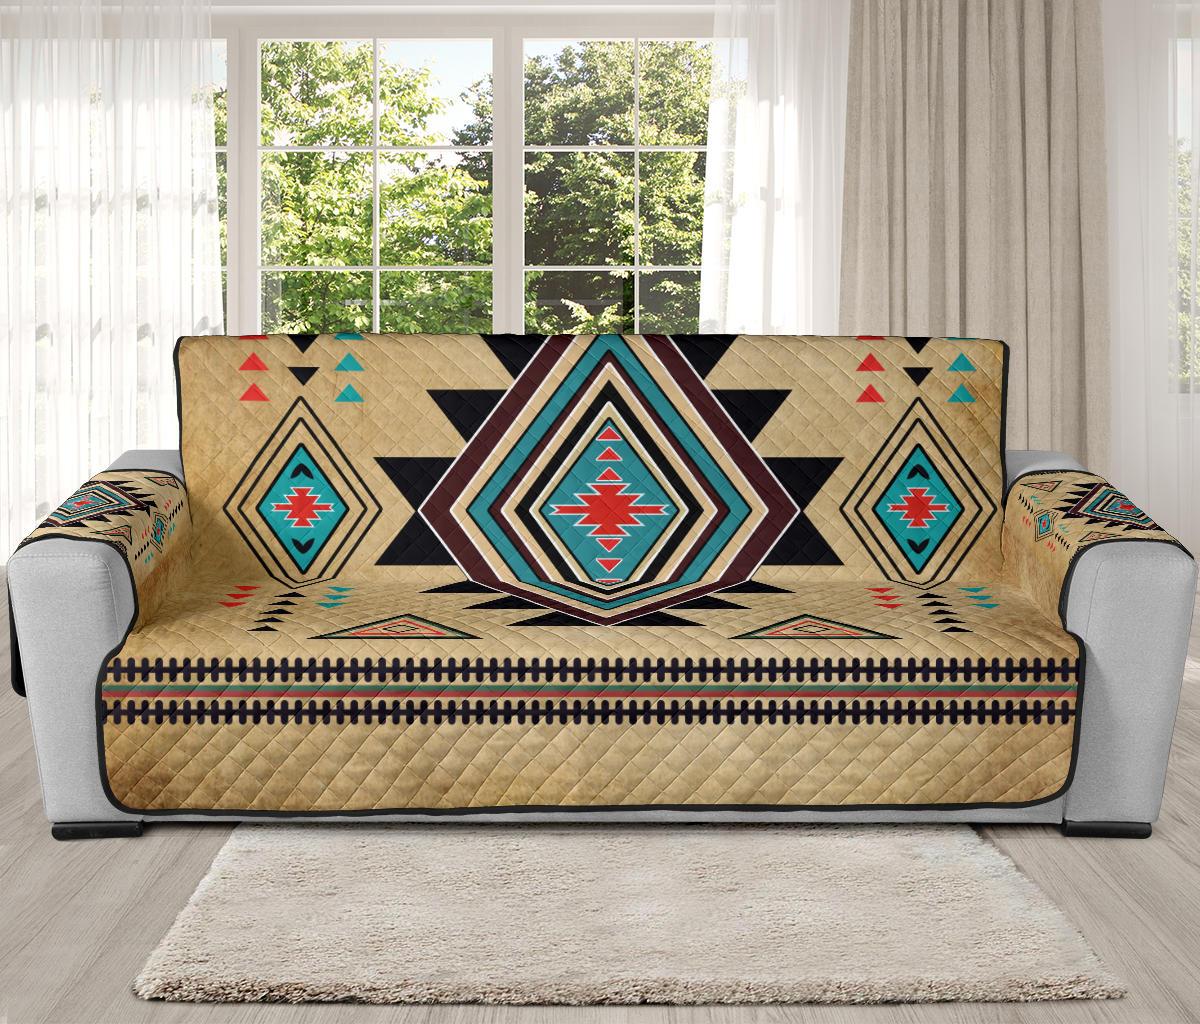 Southwest Symbol Native American 78" Oversized Sofa Protector - Powwow Store